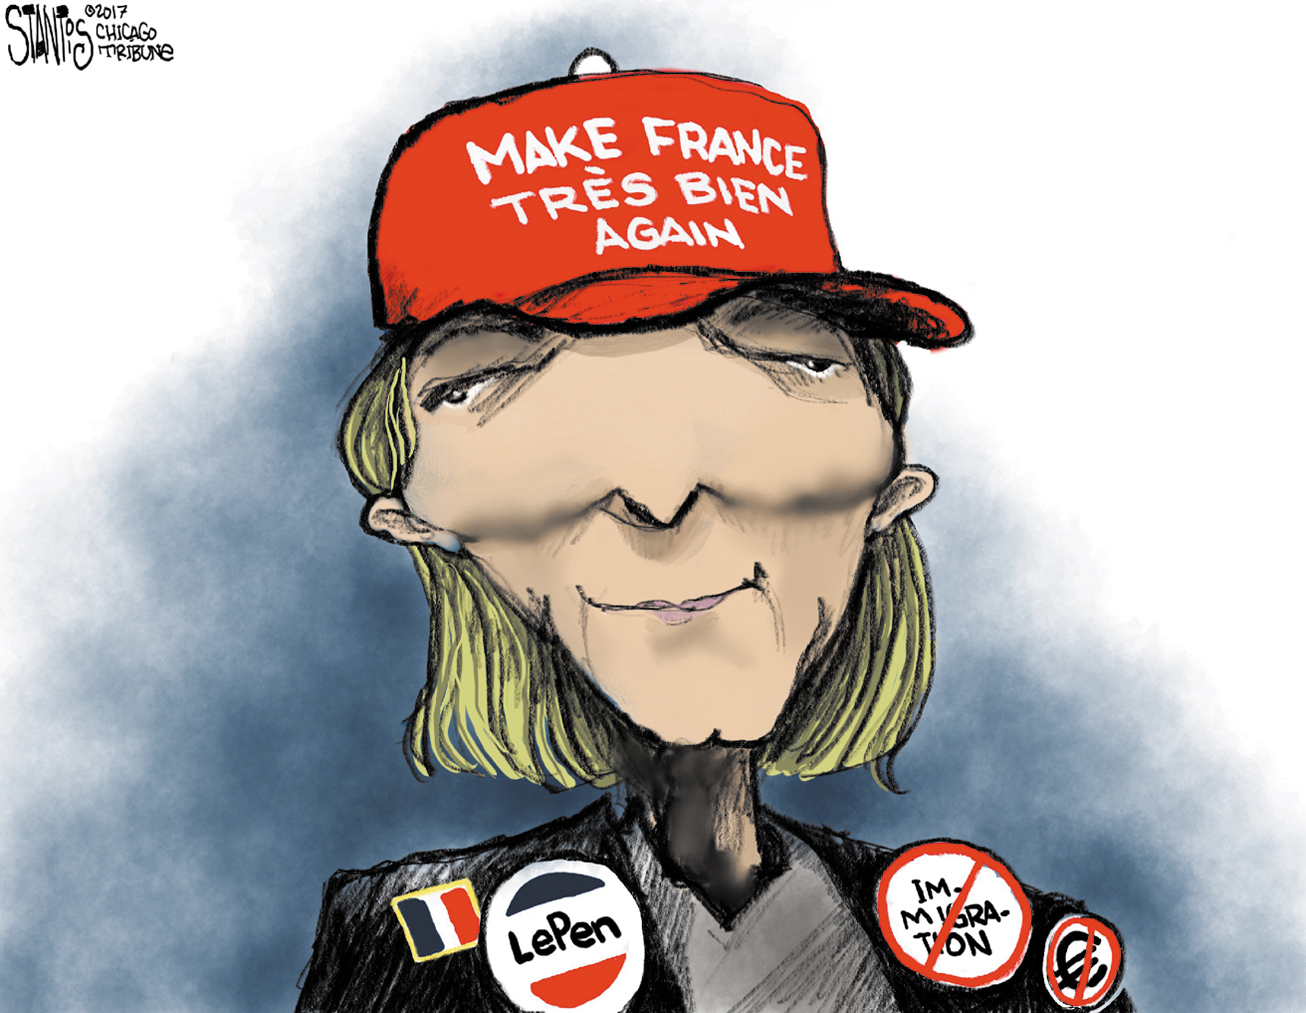 Political Cartoon International Marine Le Pen France anti-immigration  Trumpism